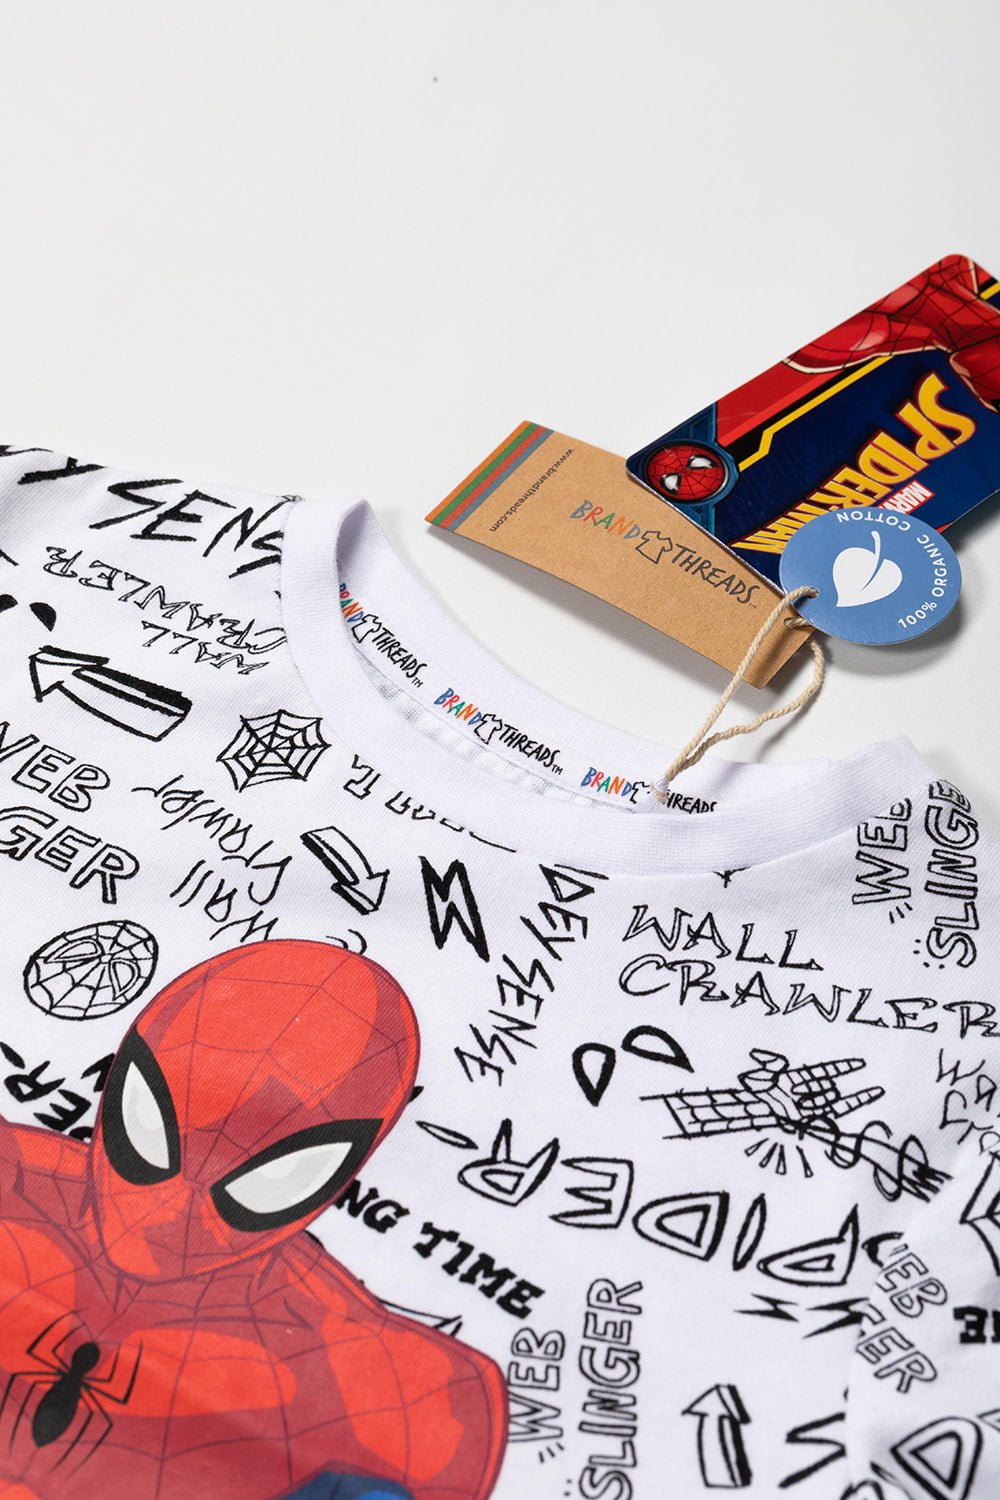 Marvel - Spiderman Boys T-shirt - Brand Threads